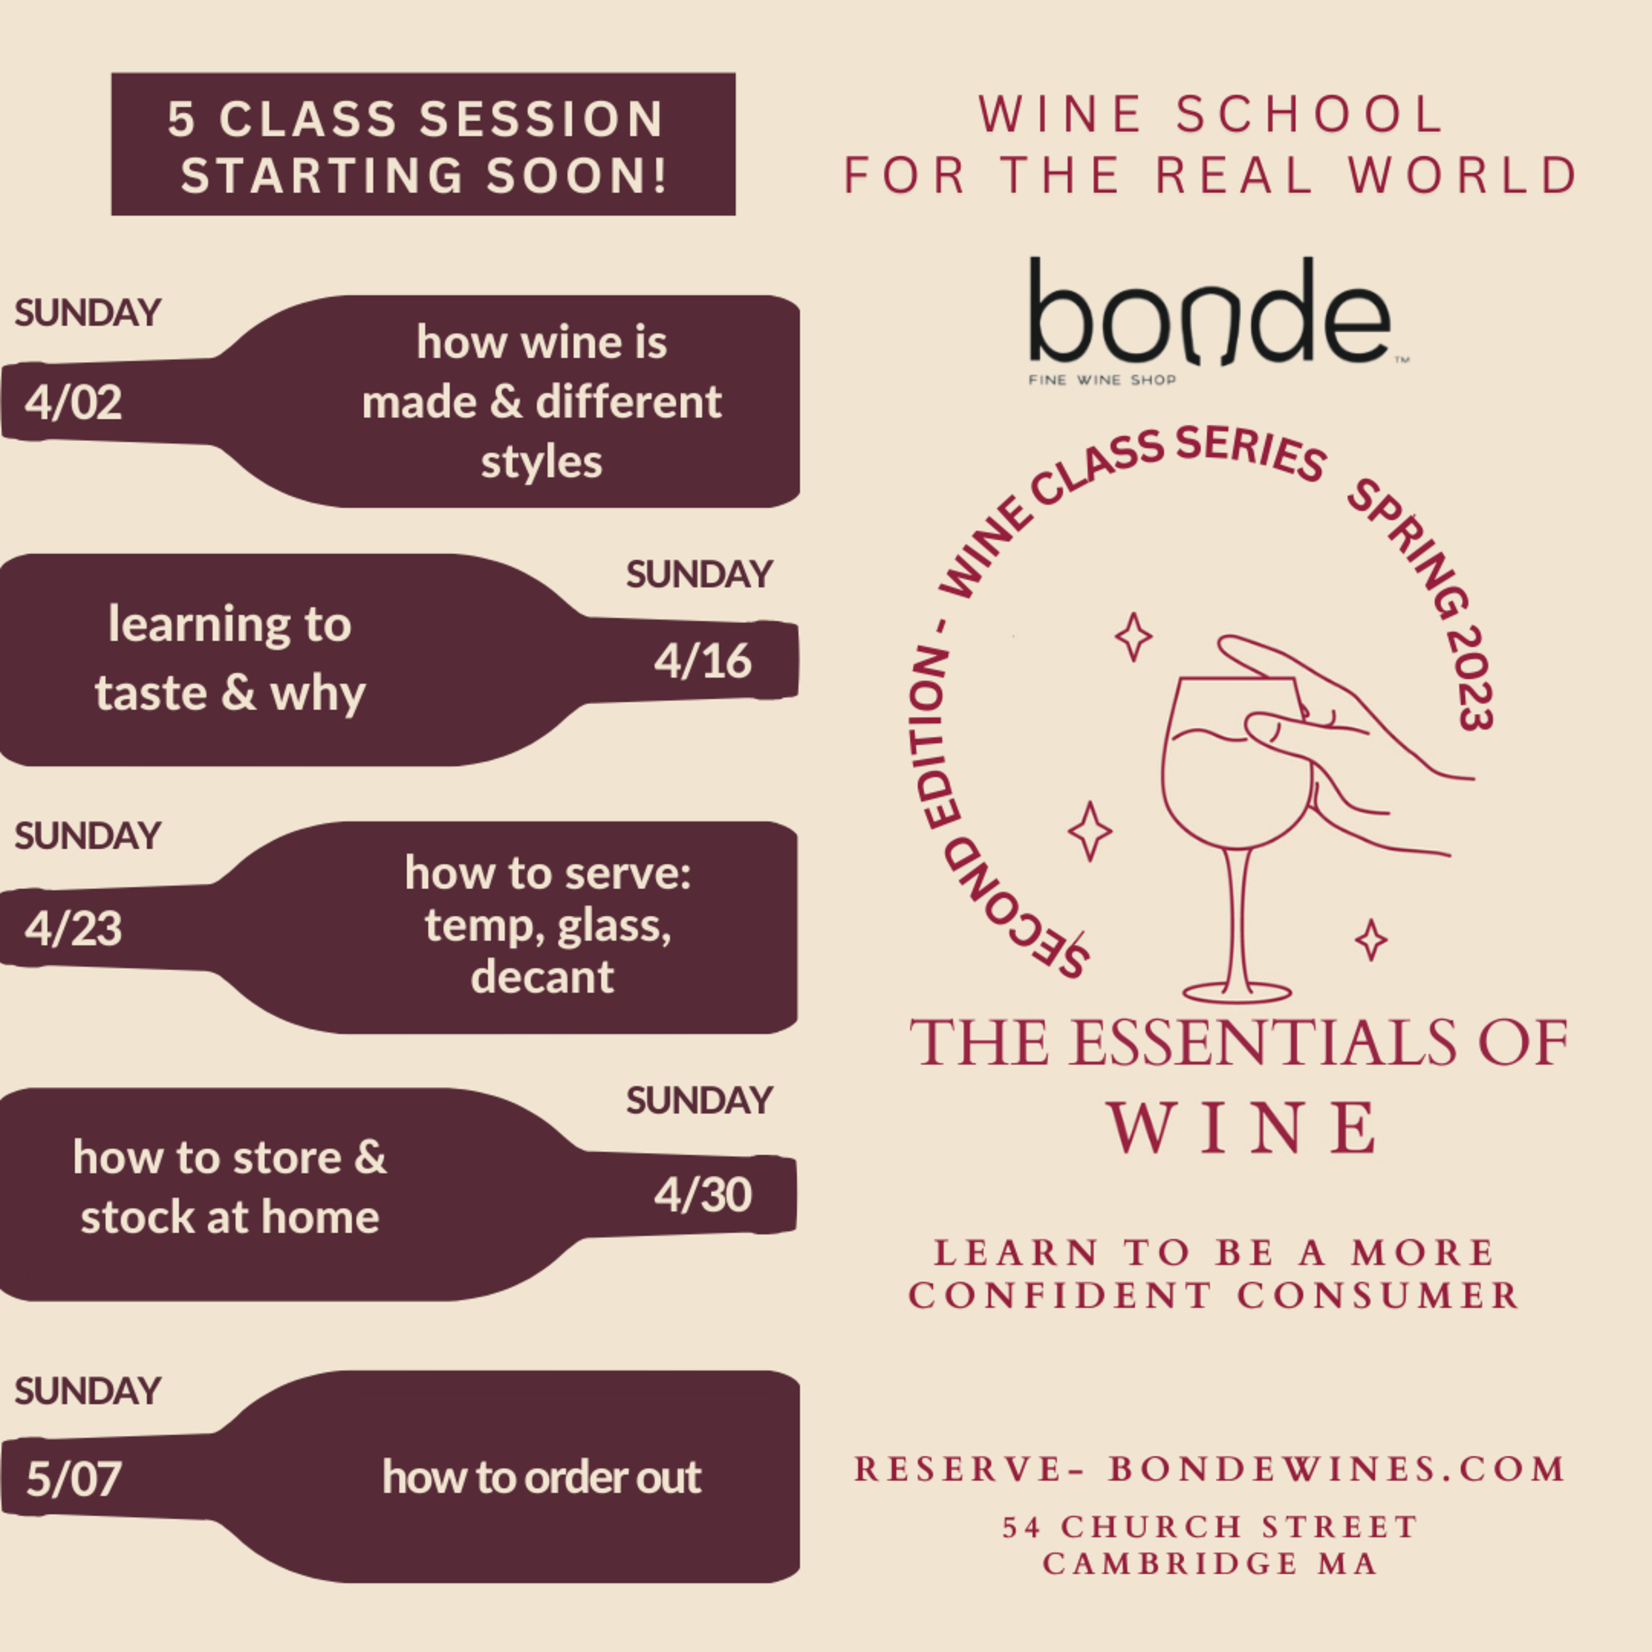 The Essentials of Wine - Bonde Wine 5 Class Series (April 2 - May 7) Sundays 5:00 - 6:30 p.m.